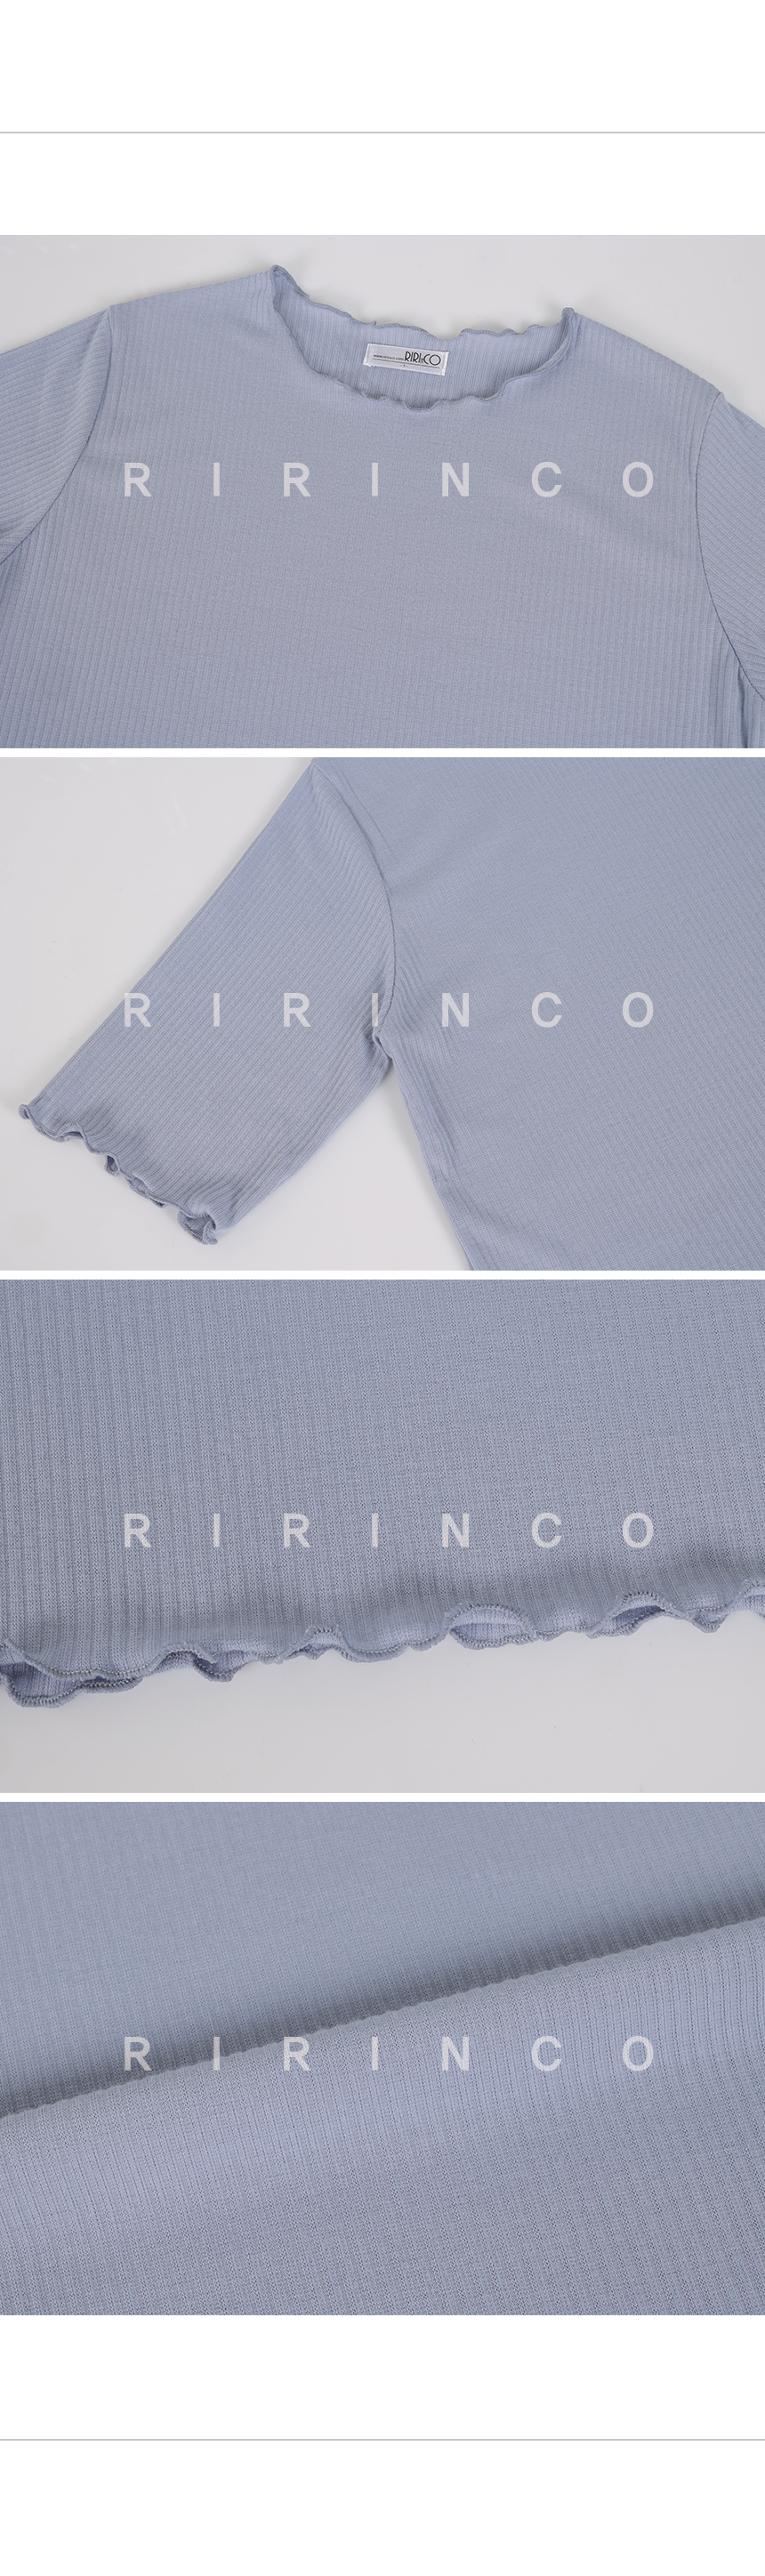 RIRINCO リブ編みラウンドネックTシャツ